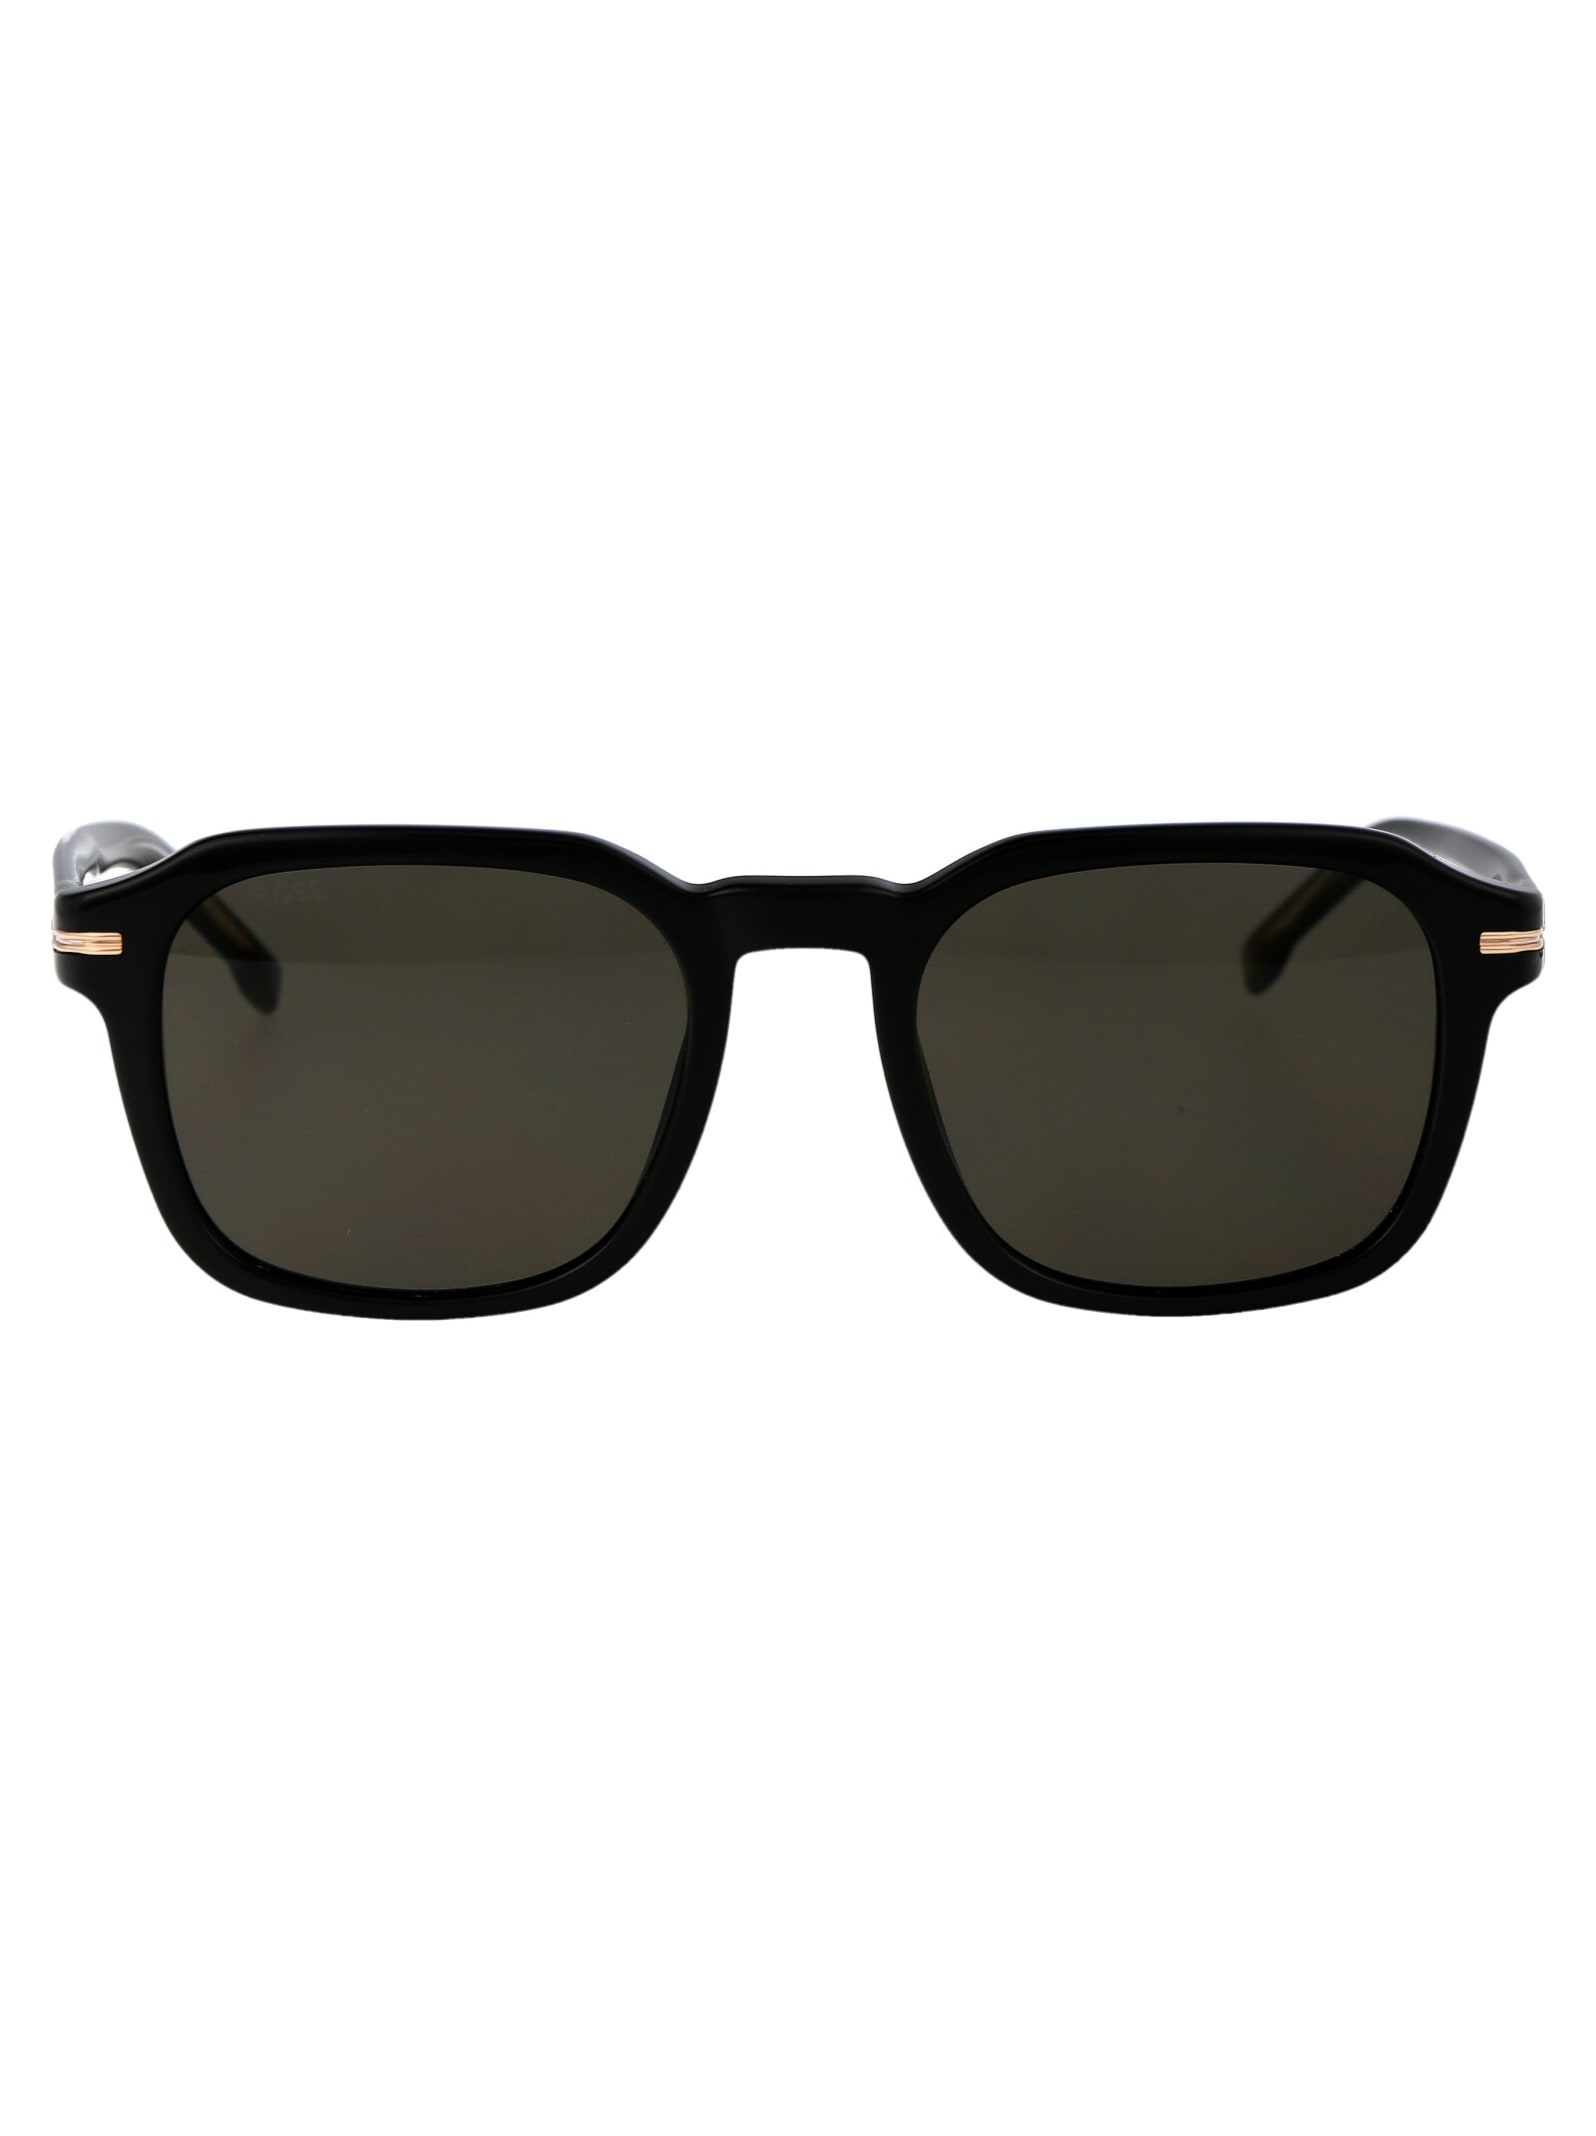 Boss 1627/s Sunglasses